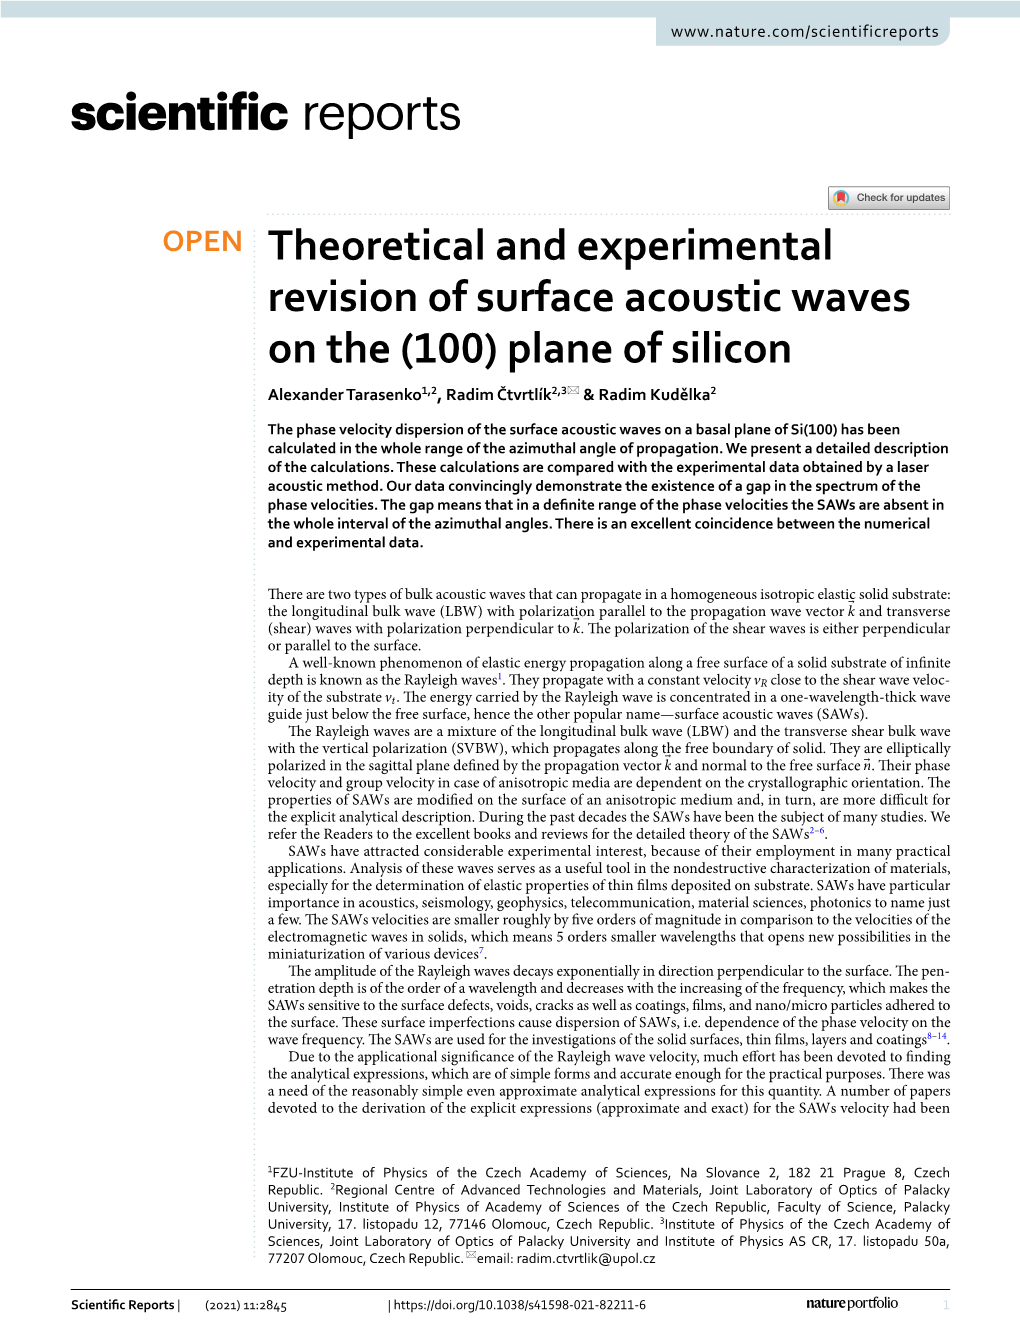 Theoretical and Experimental Revision of Surface Acoustic Waves on the (100) Plane of Silicon Alexander Tarasenko1,2, Radim Čtvrtlík2,3* & Radim Kudělka2